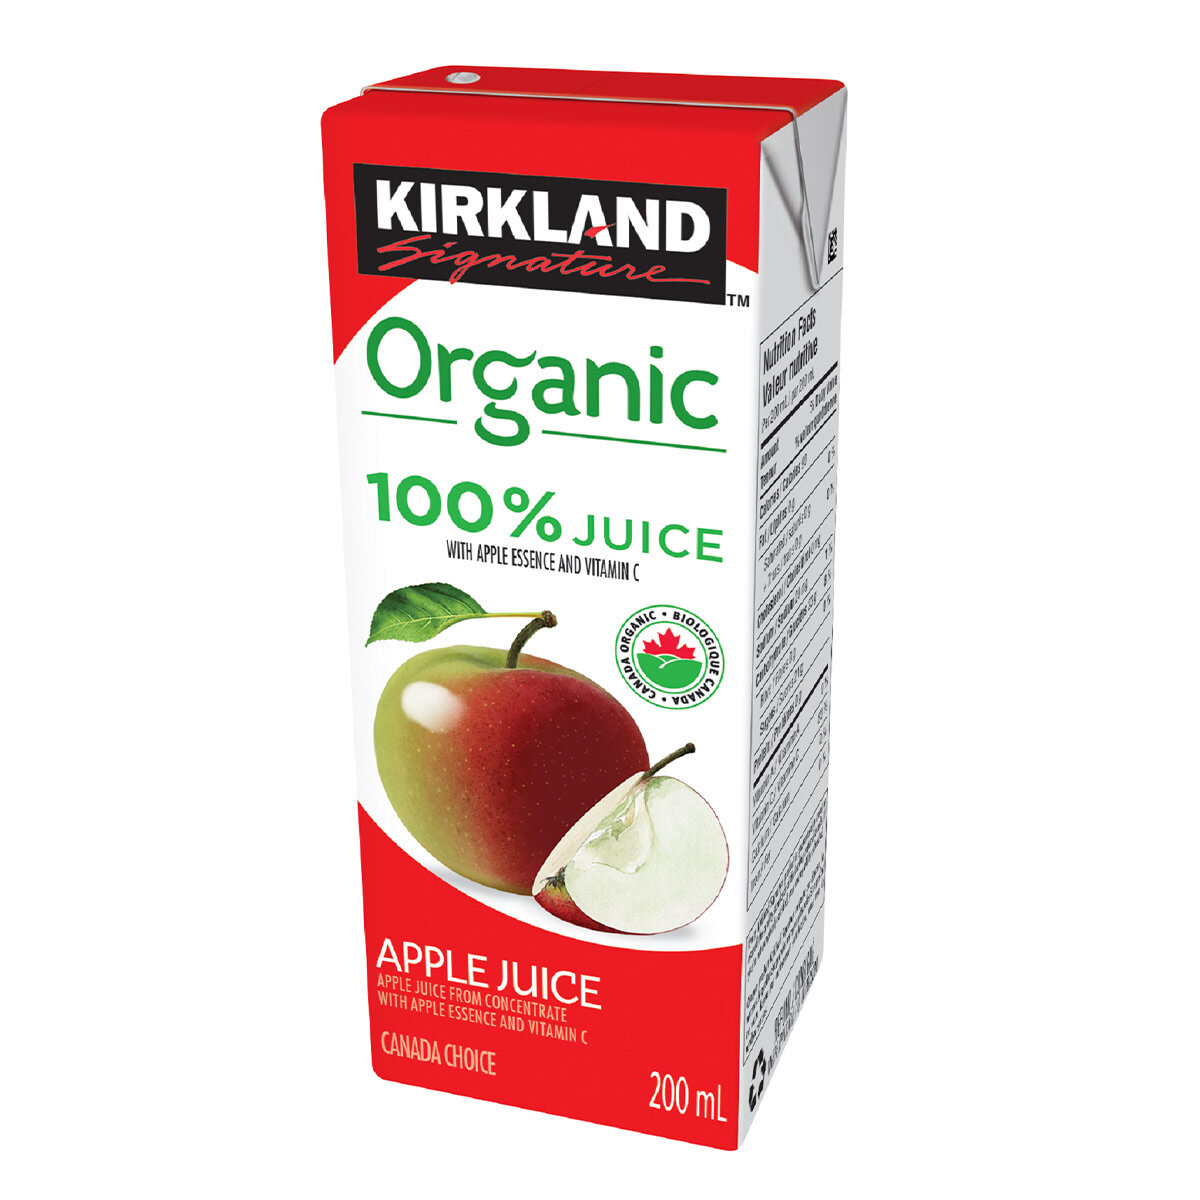 Kirkland Signature Organic Juice Boxes, 40 x 200ml